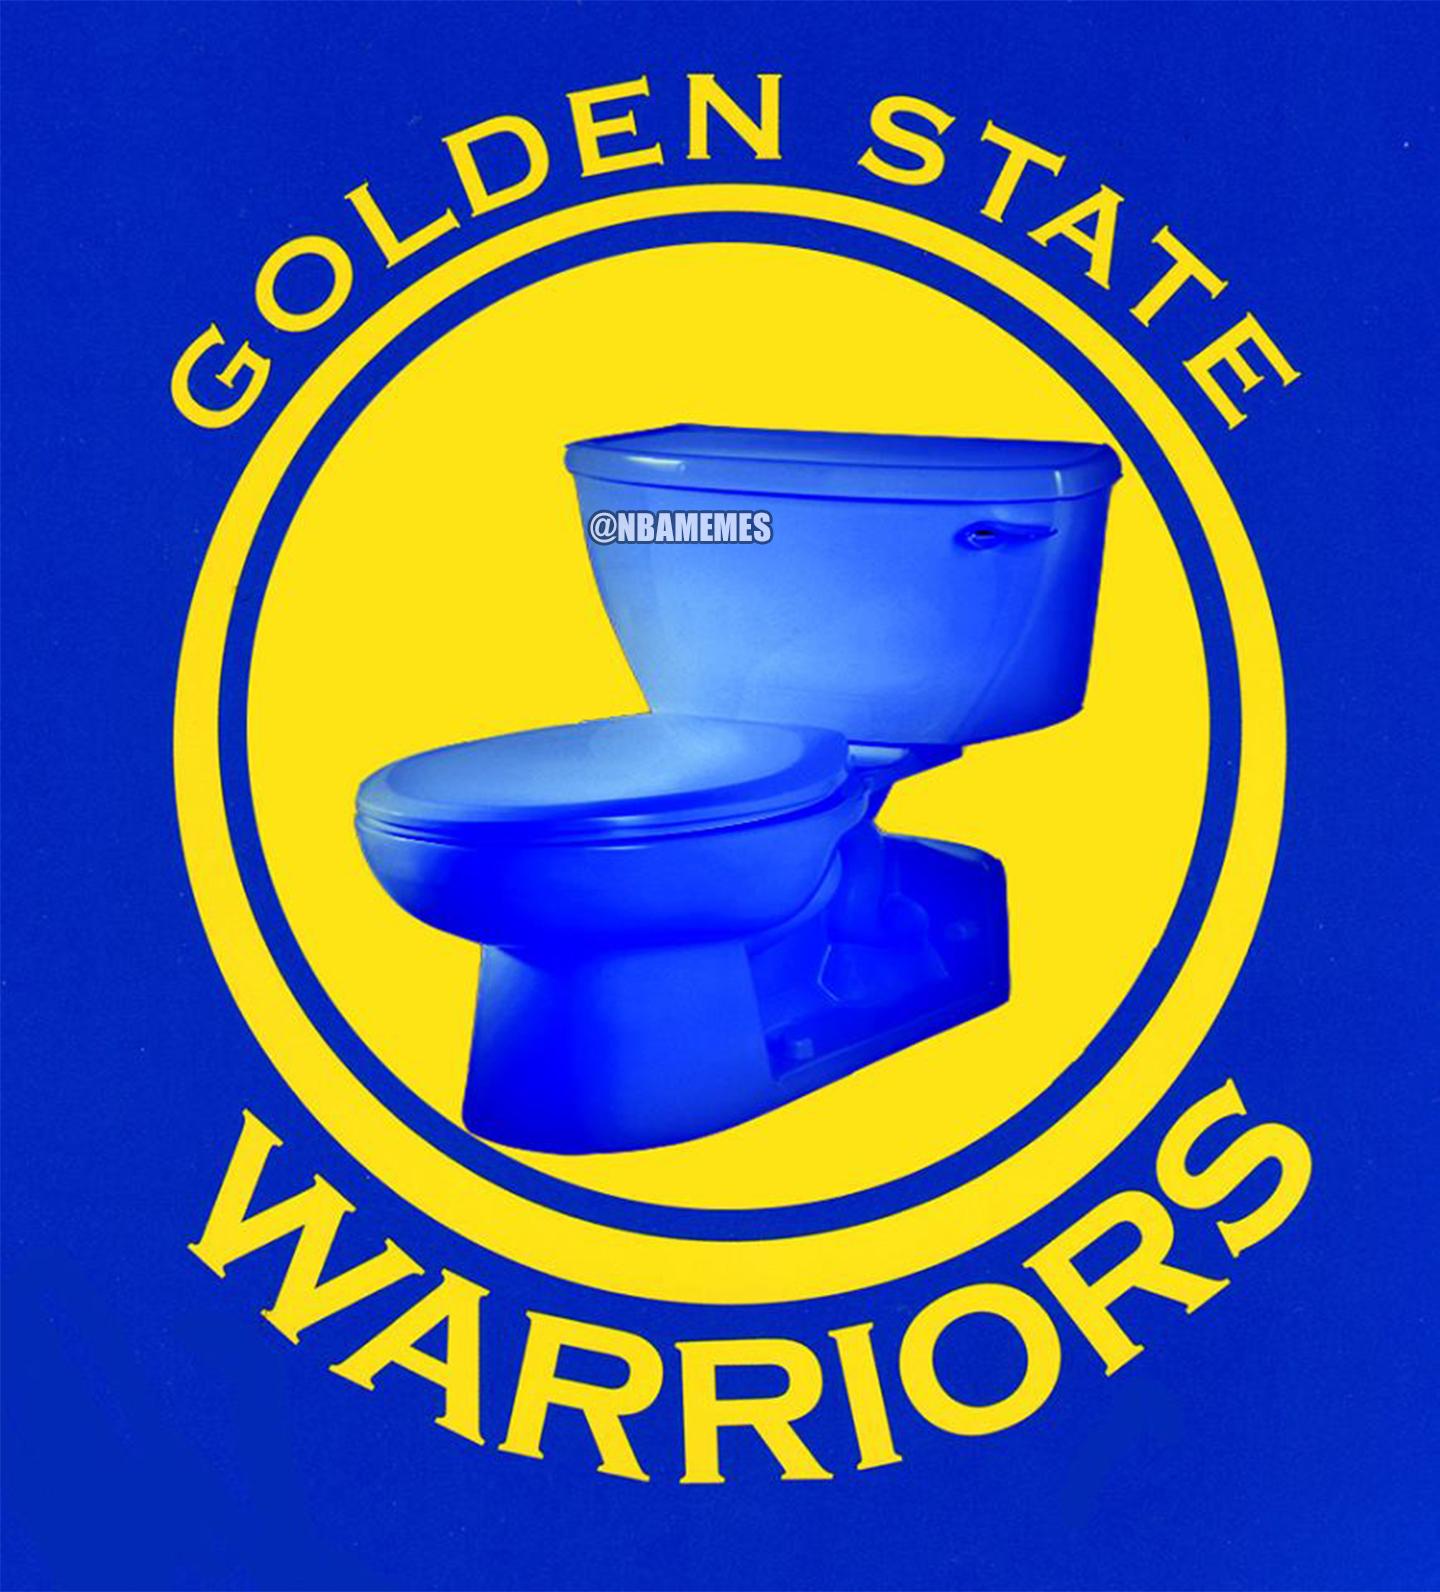 golden state warriors new arena toilet